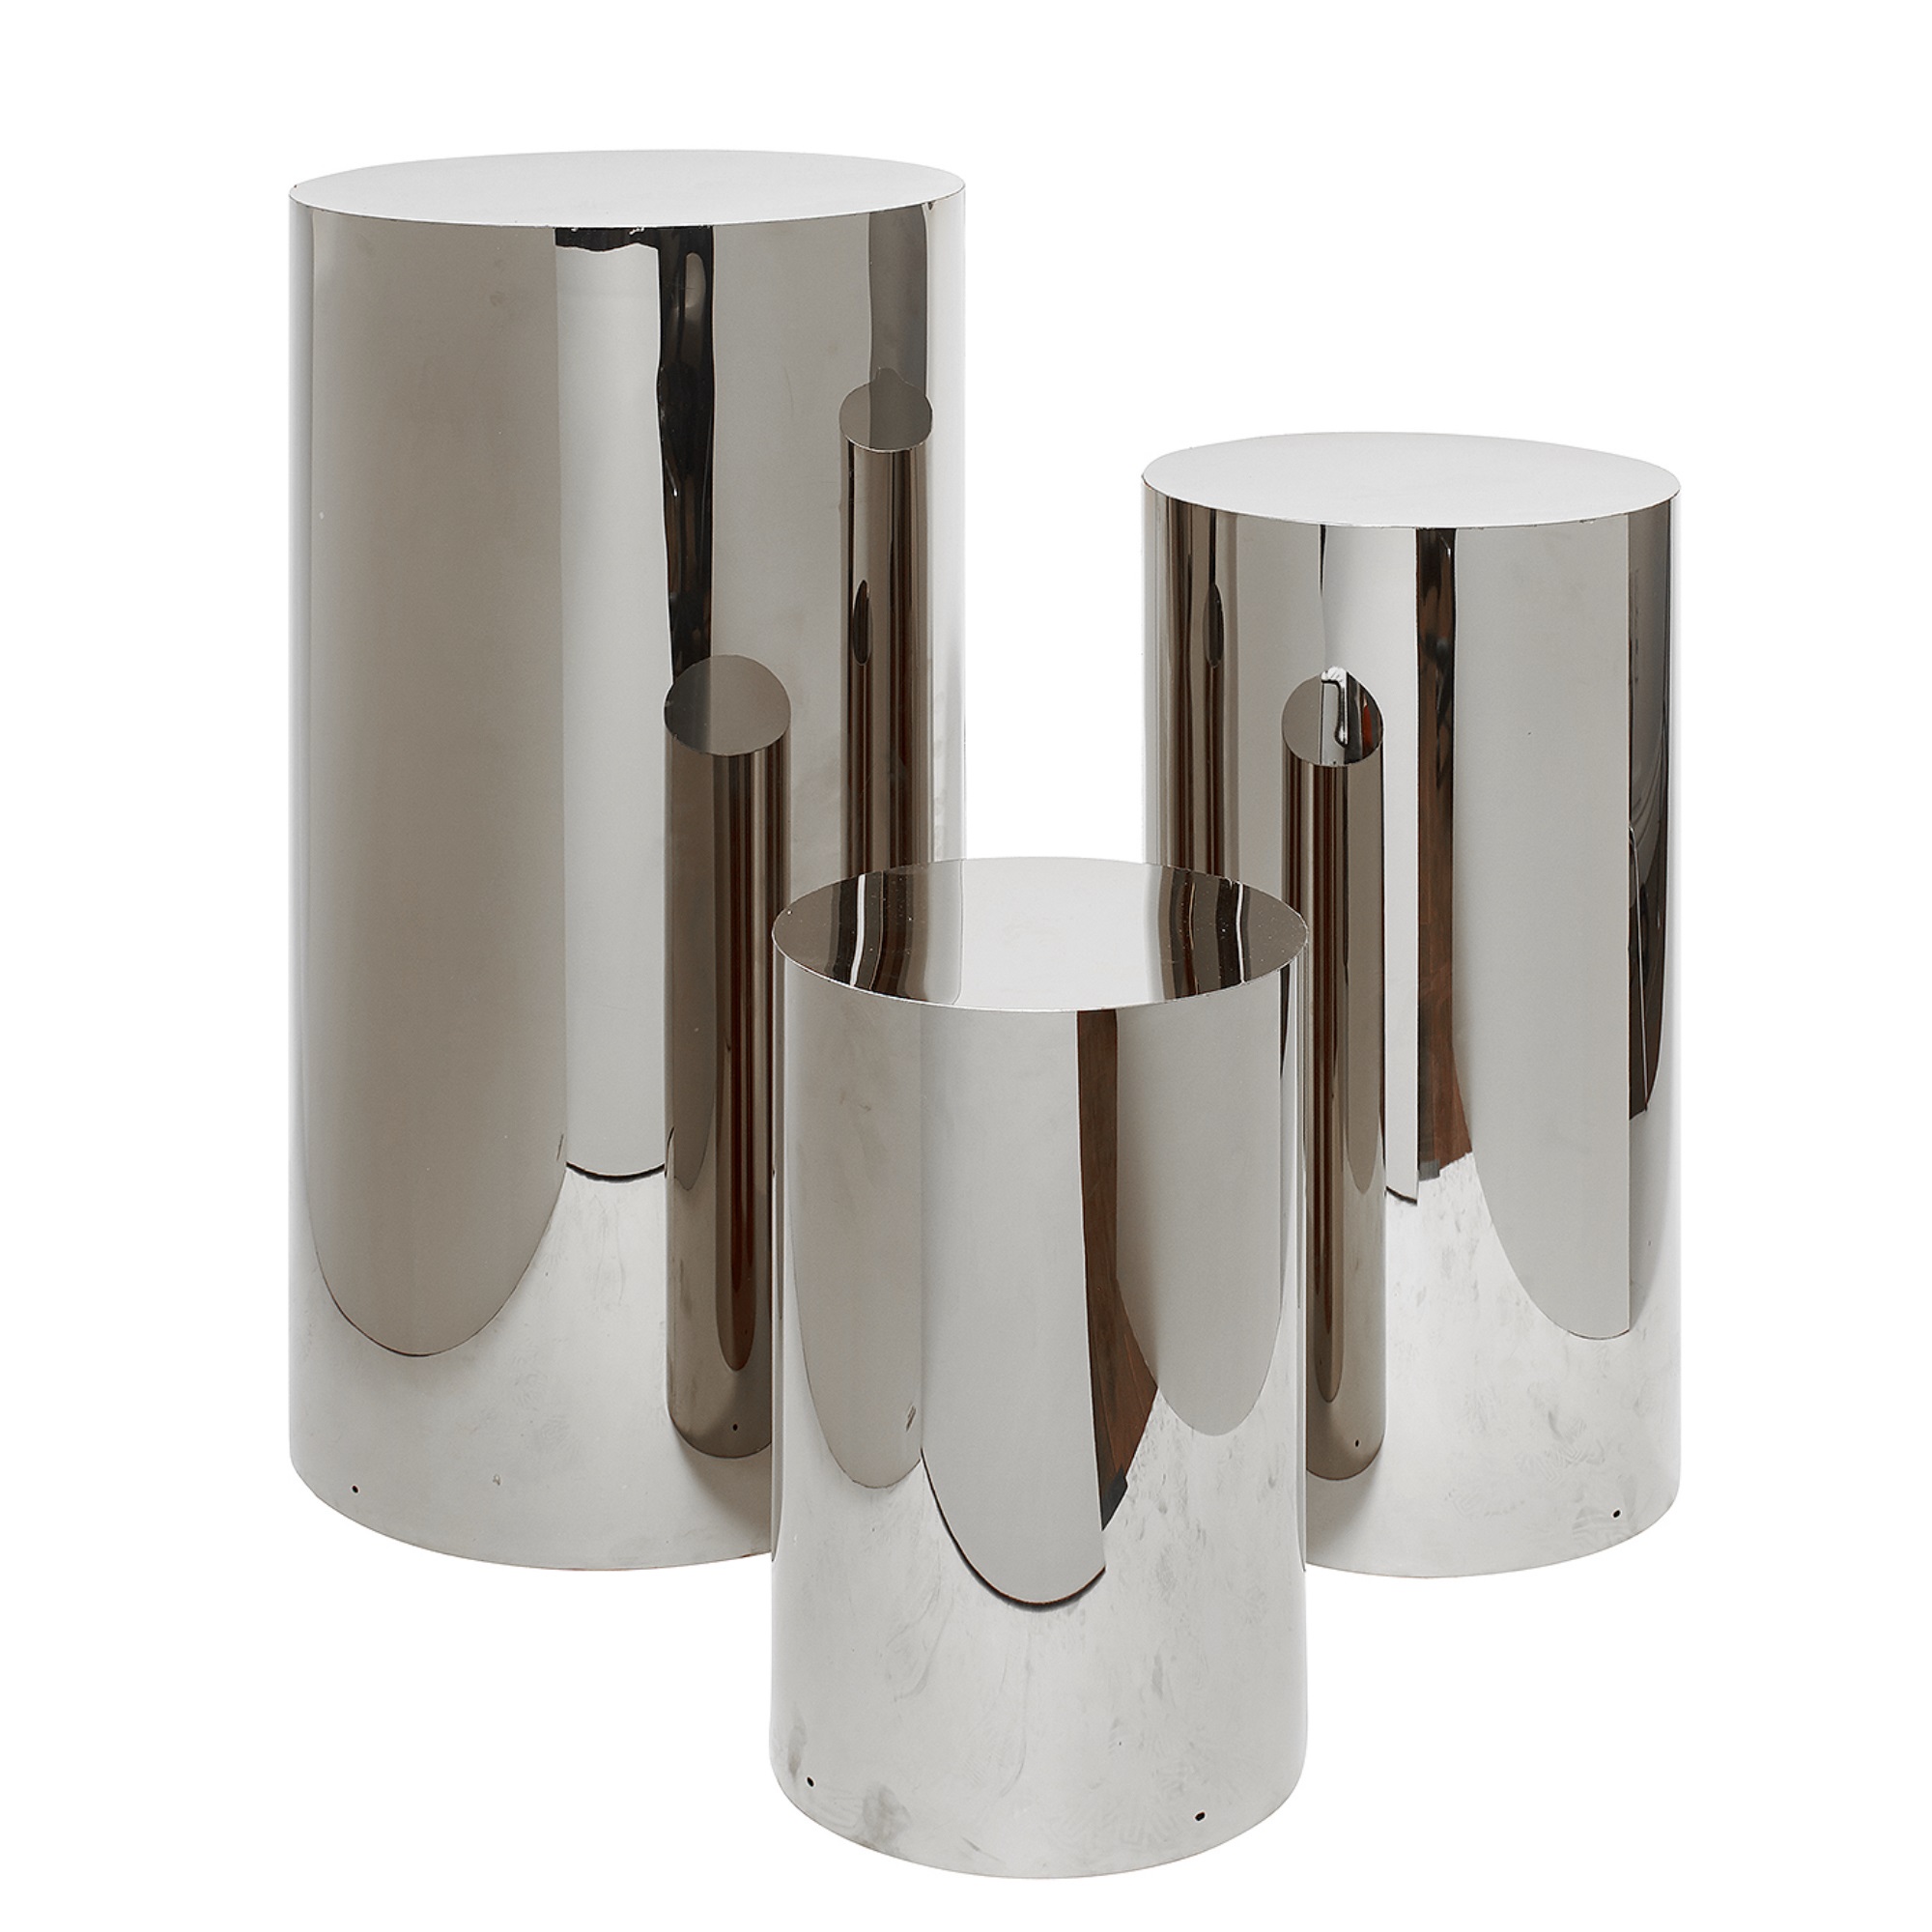 Metal Cylinder Pedestals Display 3pc/set - Silver